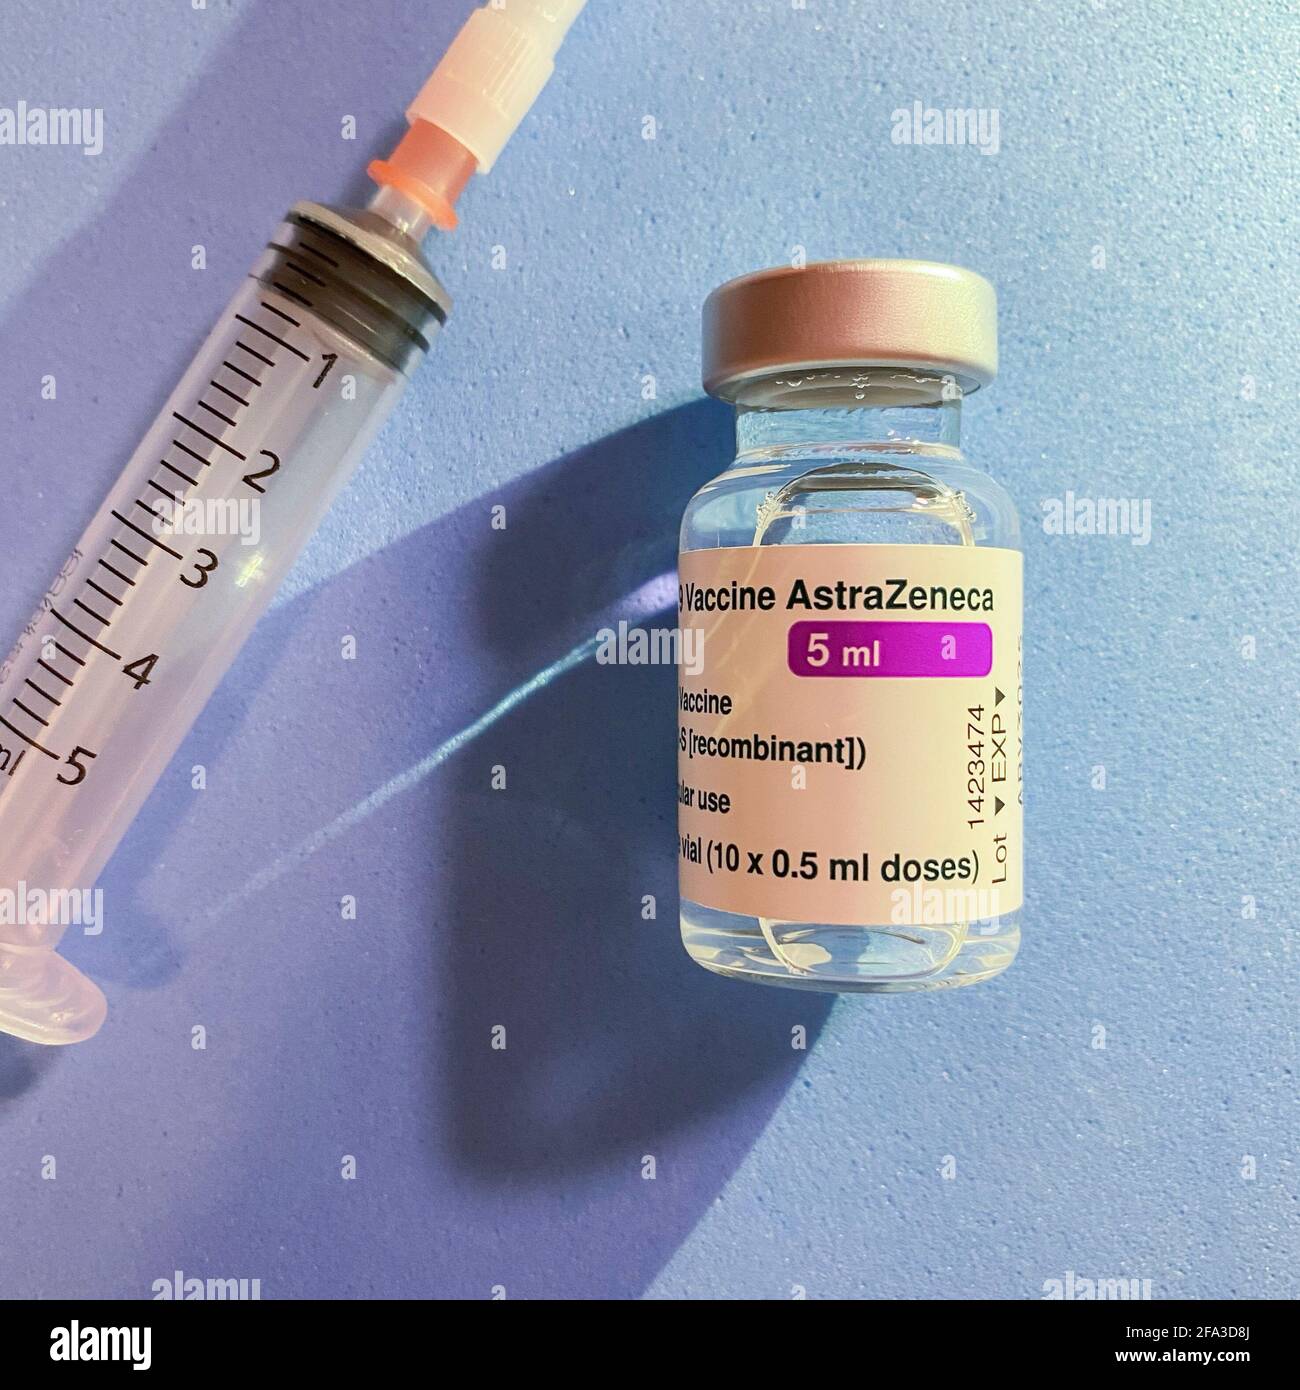 London, UK - 08 Mar 2021: Close-up of Astra Zeneca Pharmaceuticals' coronavirus vaccine next to a syringe Stock Photo